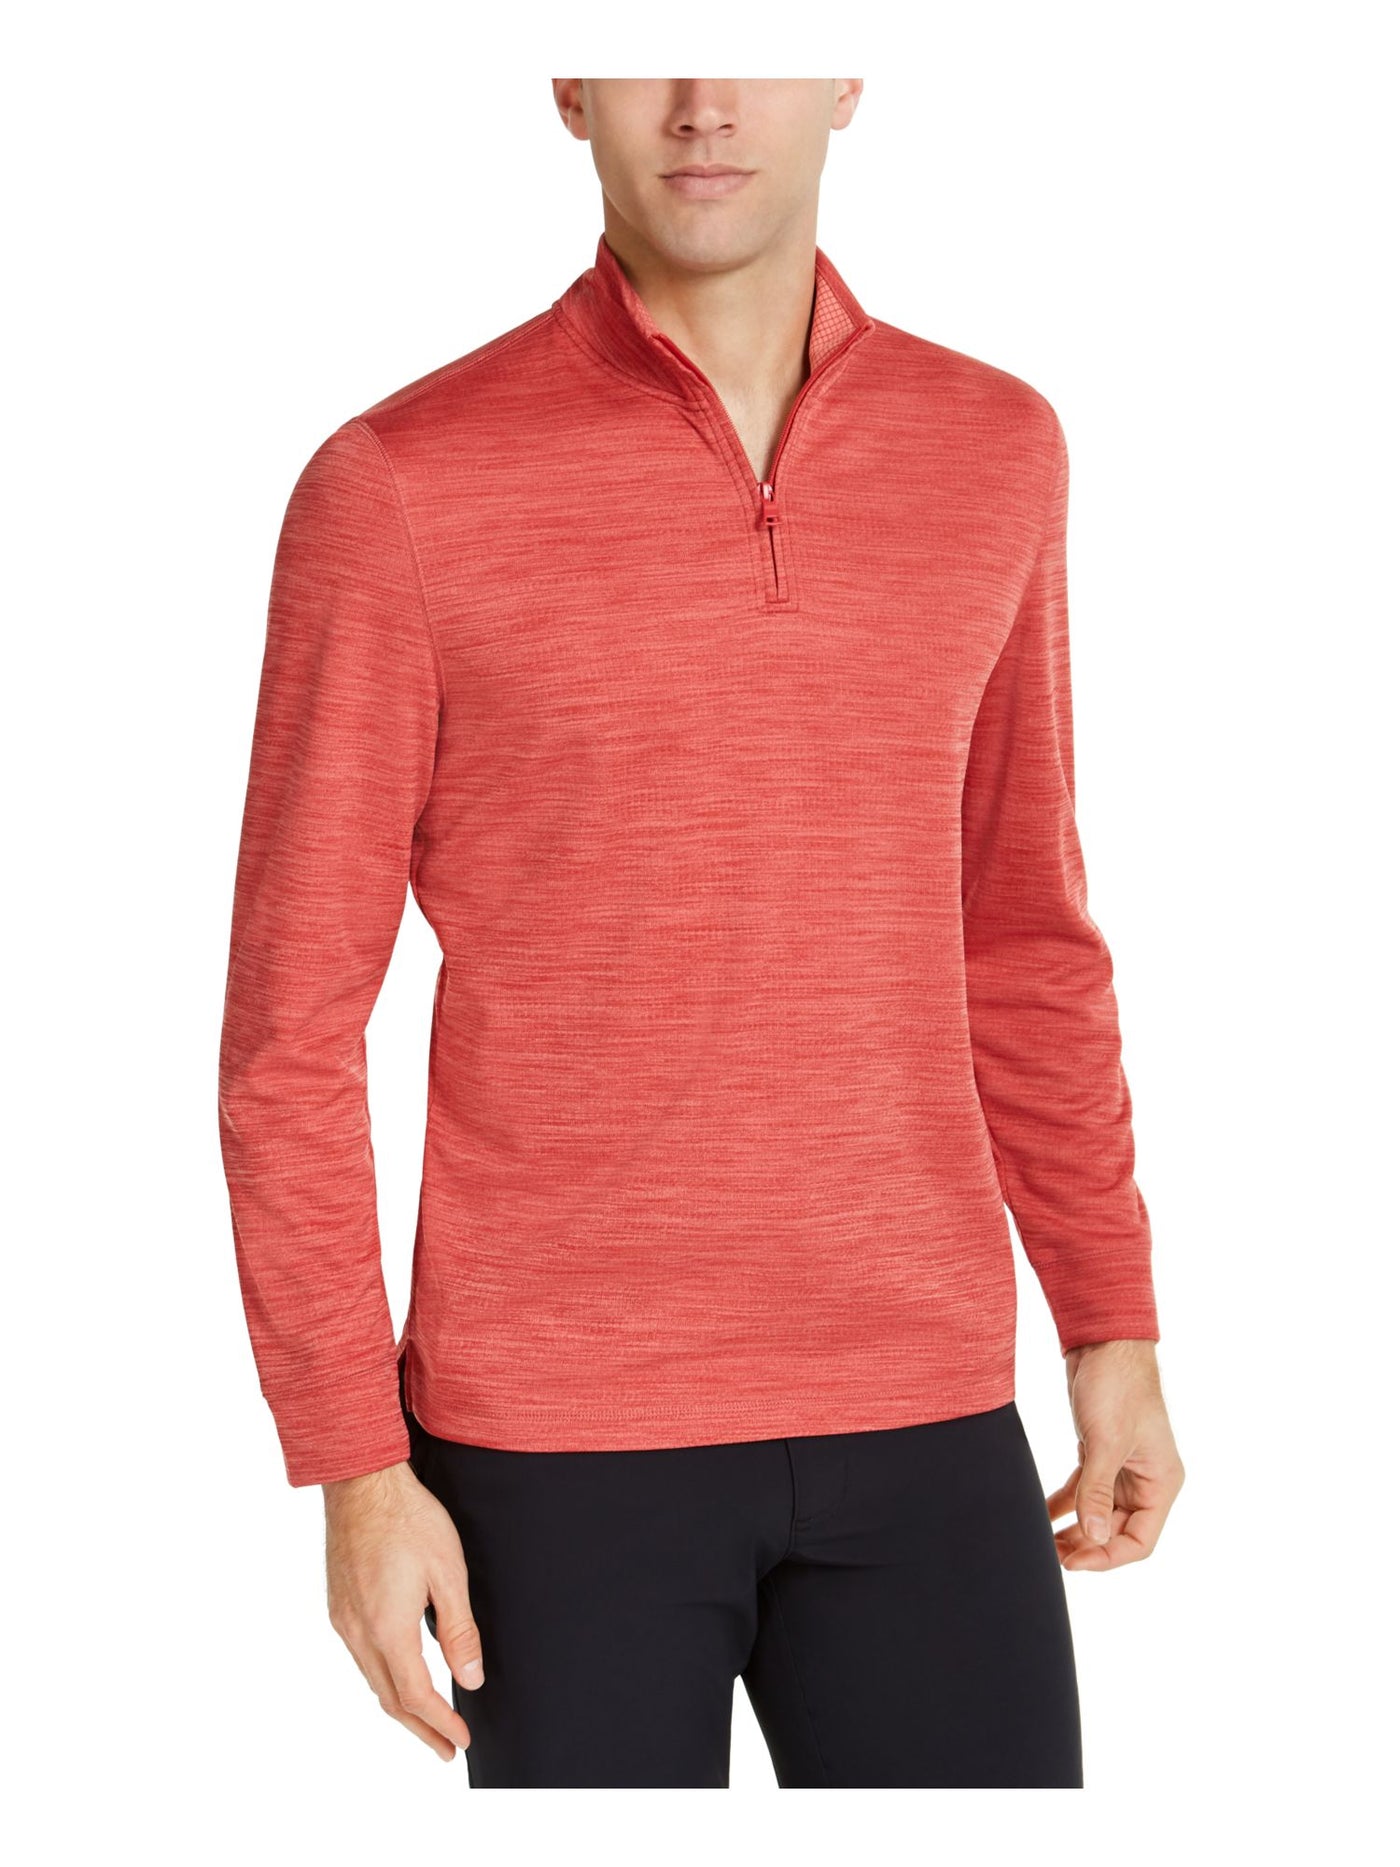 CLUBROOM Mens Red Printed Collared Quarter-Zip Sweatshirt XL